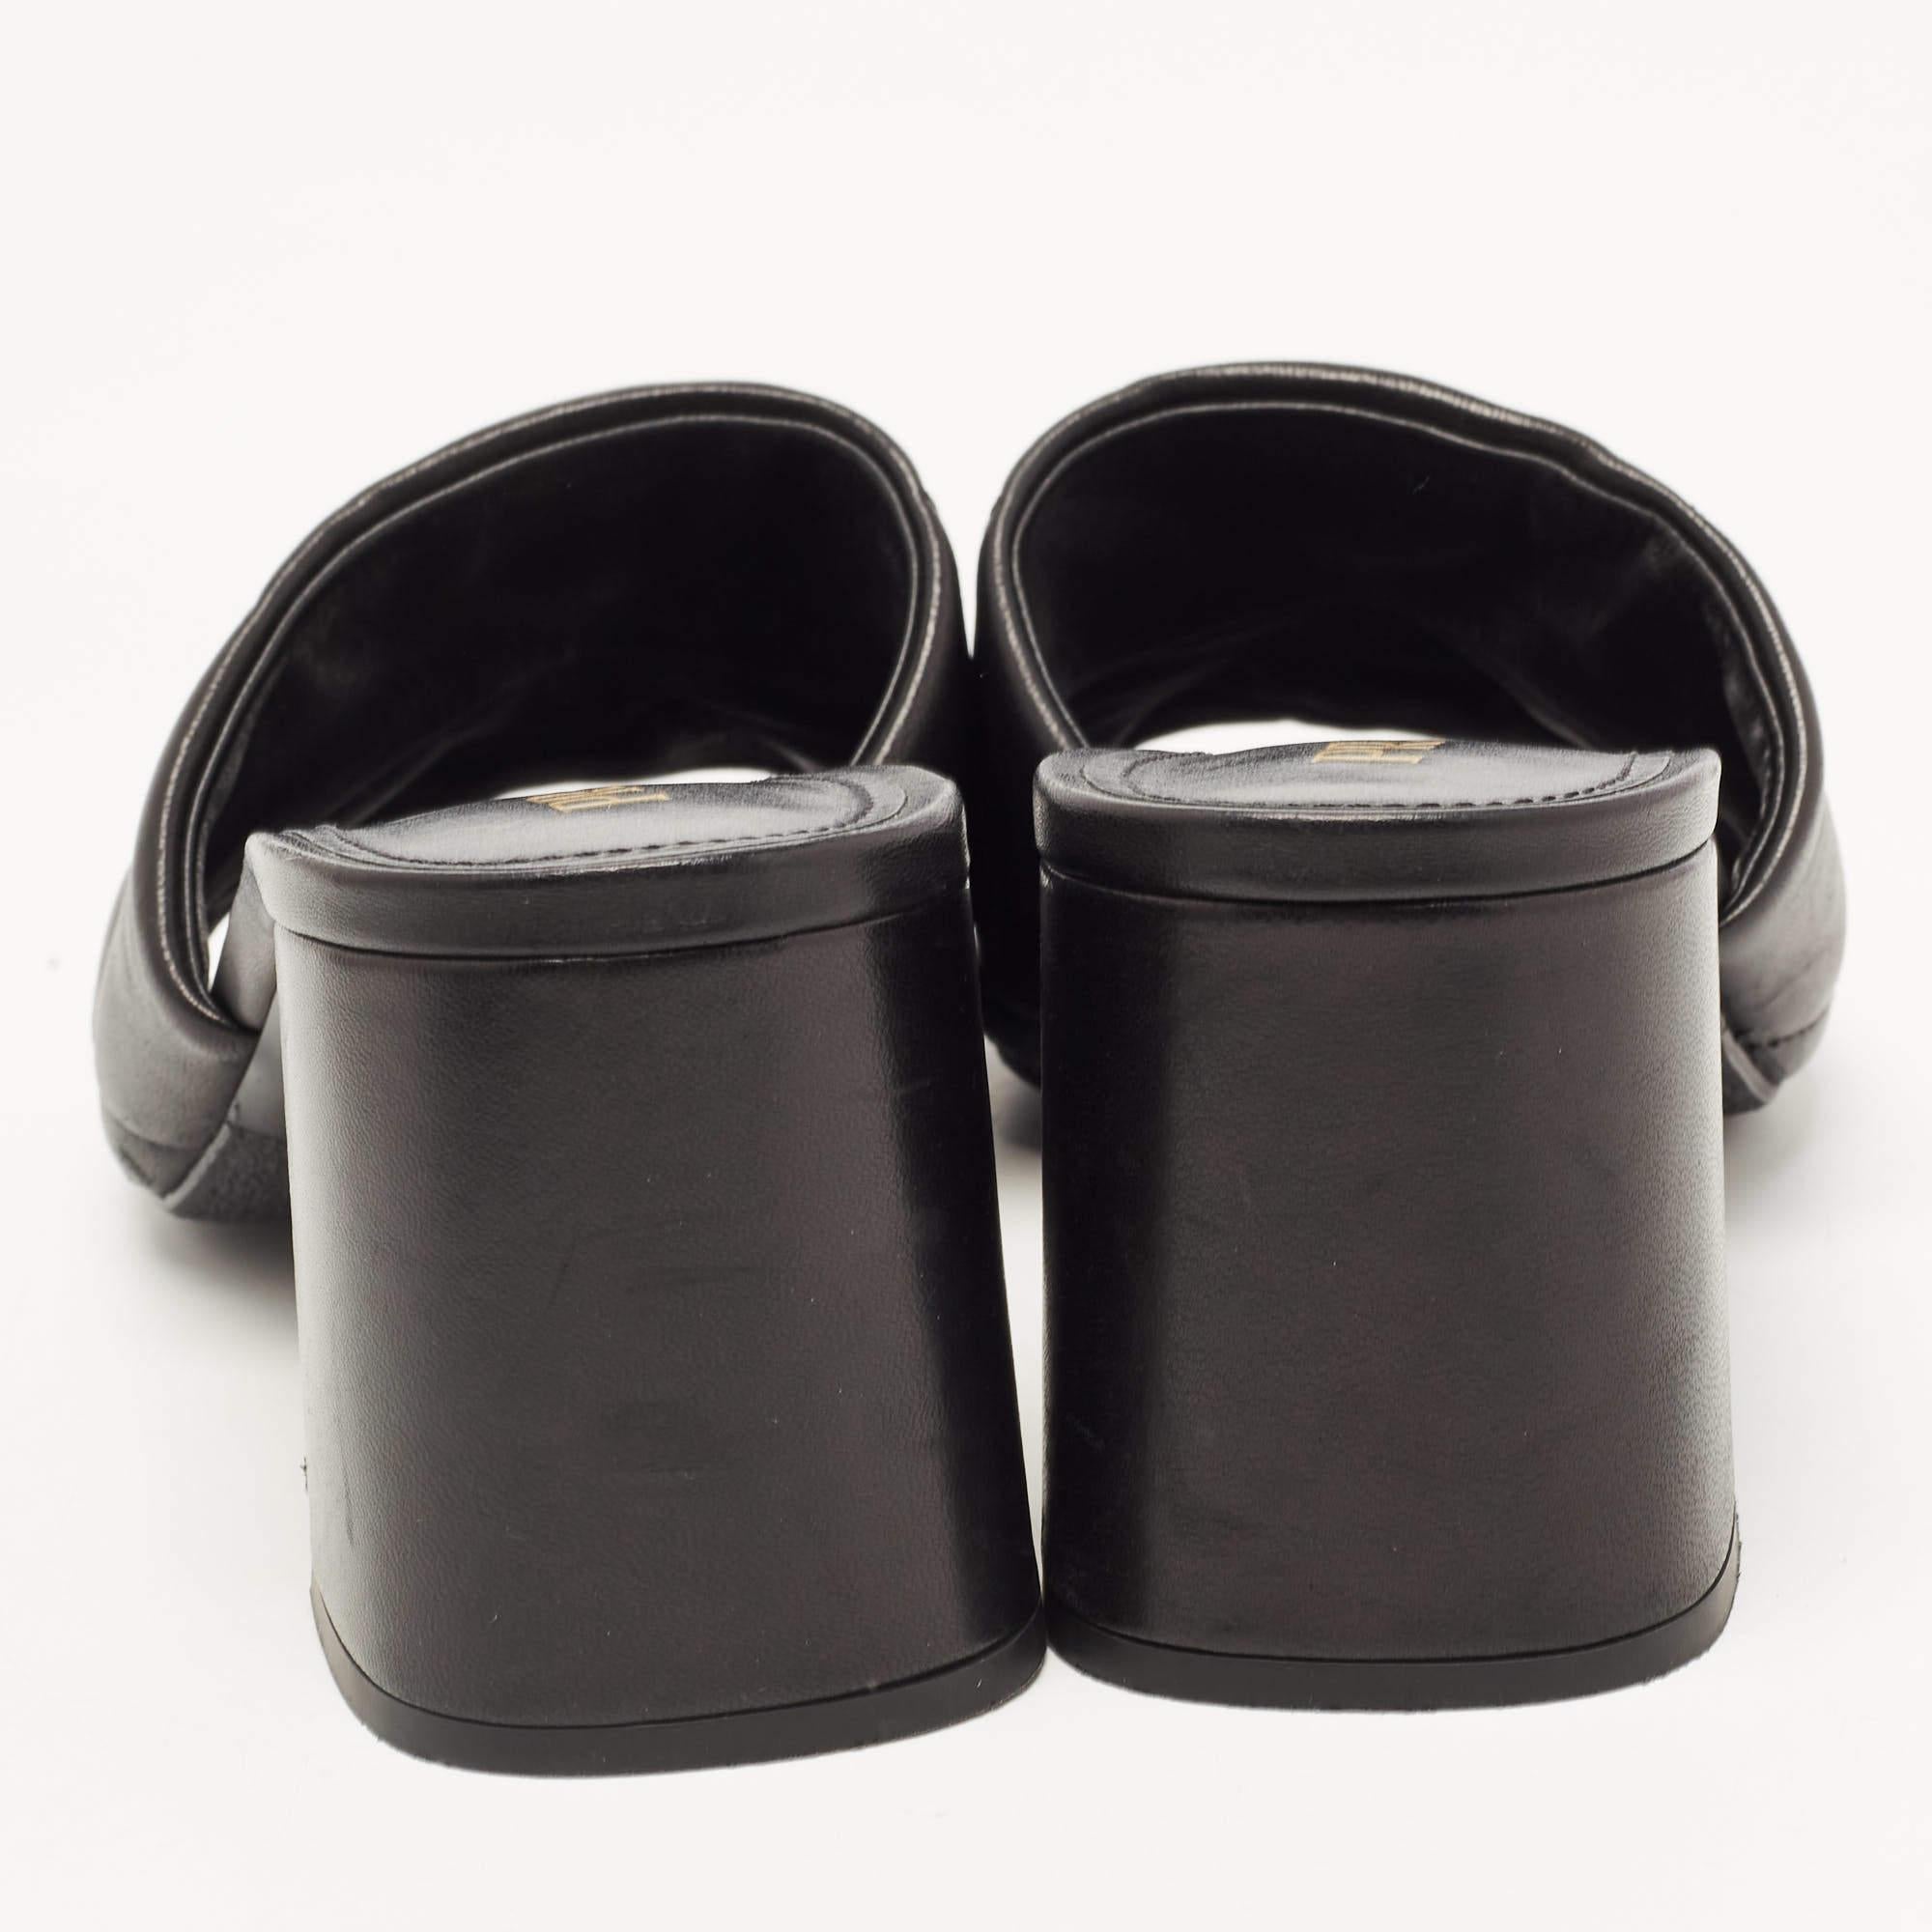 Prada Black Quilted Leather Slide Sandals Size 39 2